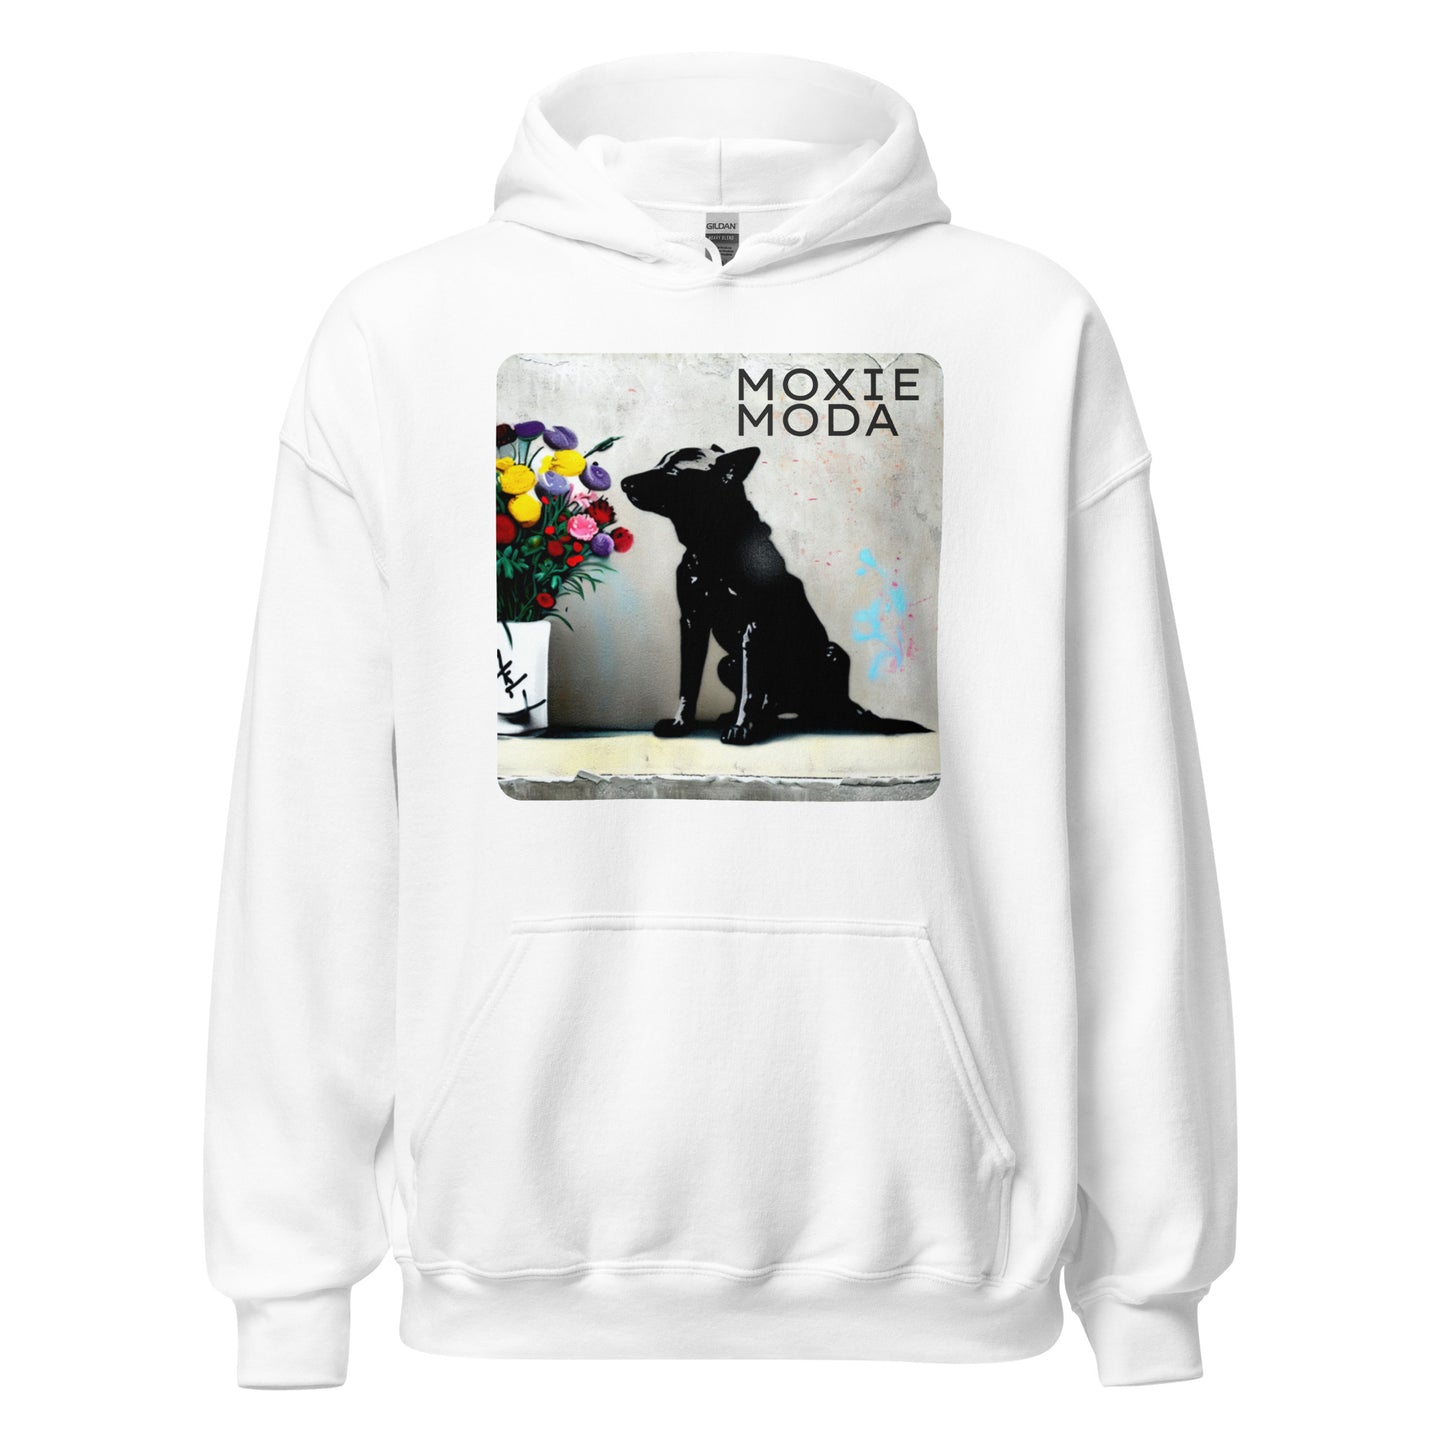 1|26 Mini the Moxie Dog - Hoodie - MOXIE MODA